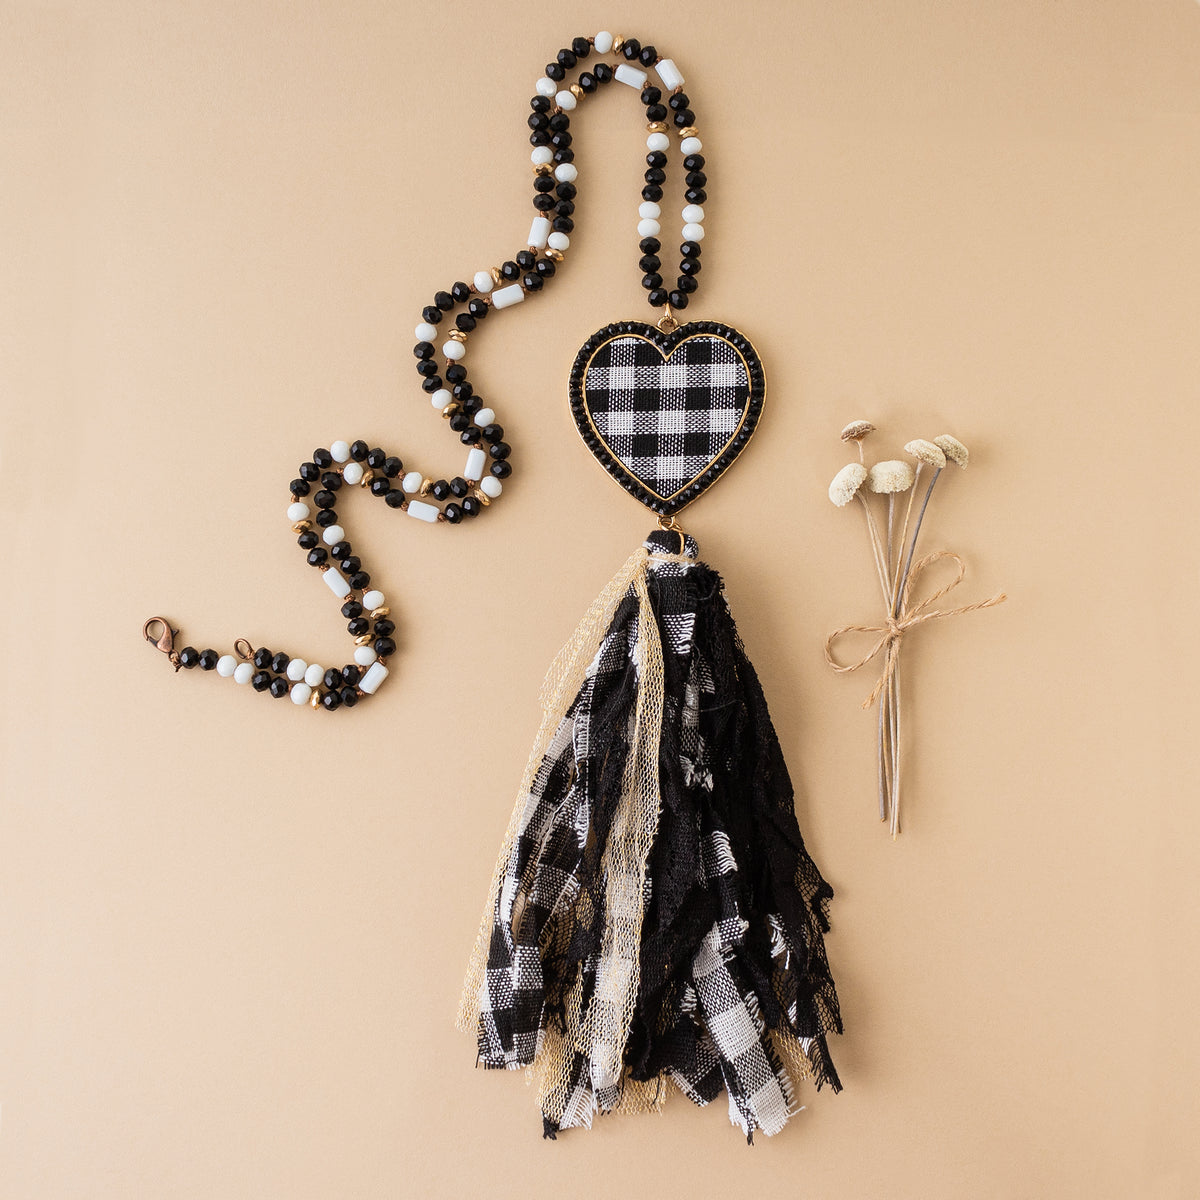 72322 - Heart Buffalo Plaid Necklace - Black & White - Fashion Jewelry Wholesale